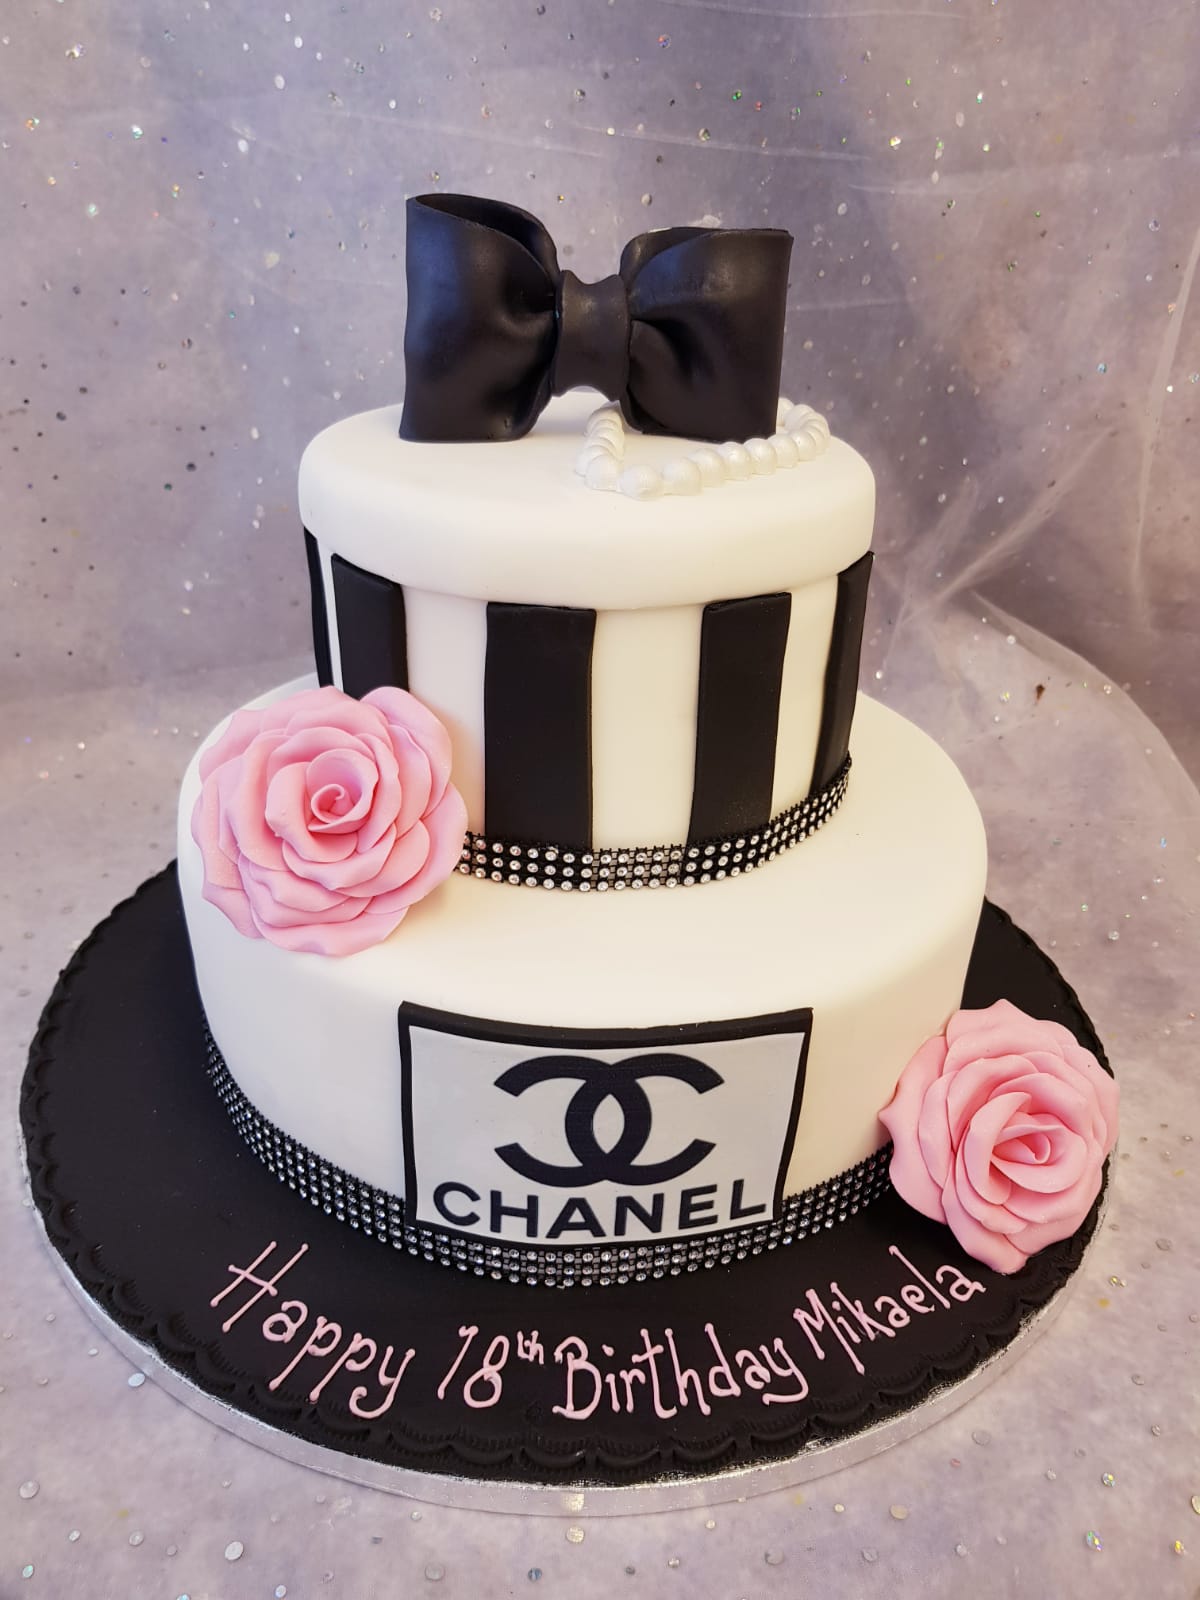 Chanel Makeup Birthday Cakes - Makeup Vidalondon